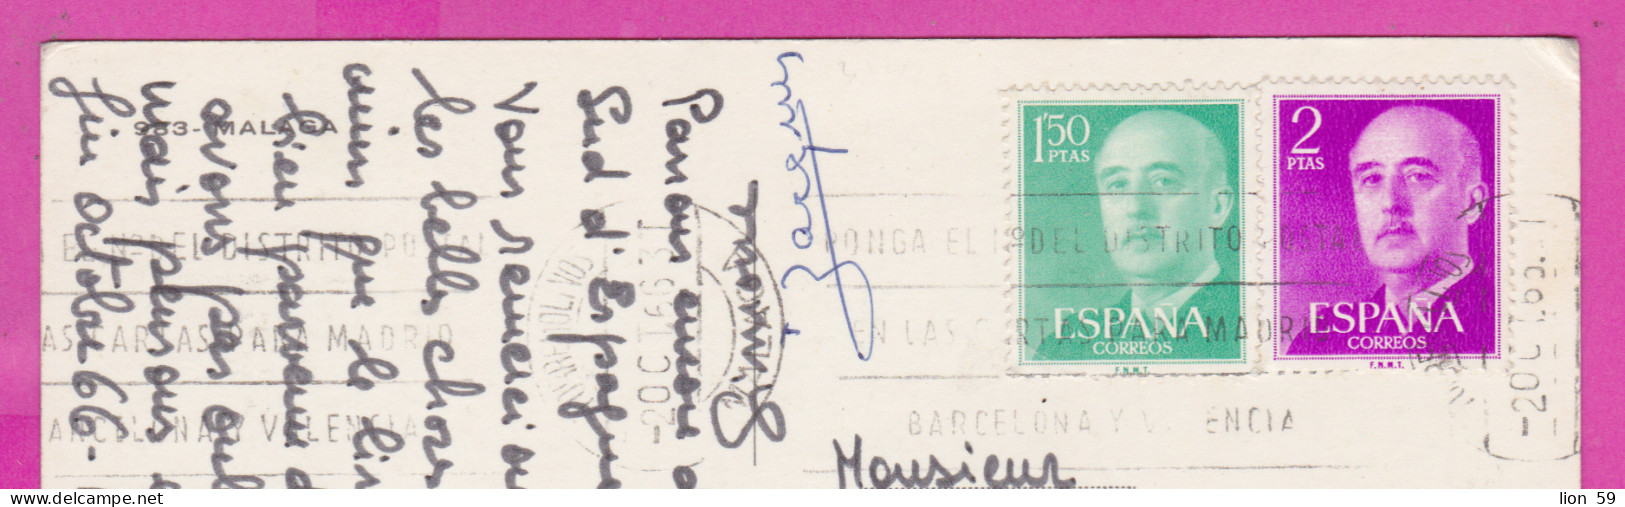 293811 / Spain - Malaga PC 1966 USED 1.50+2 PtaGeneral Francisco Franco Flamme " PONGA No. DISTRITO POSTAL.... - Lettres & Documents